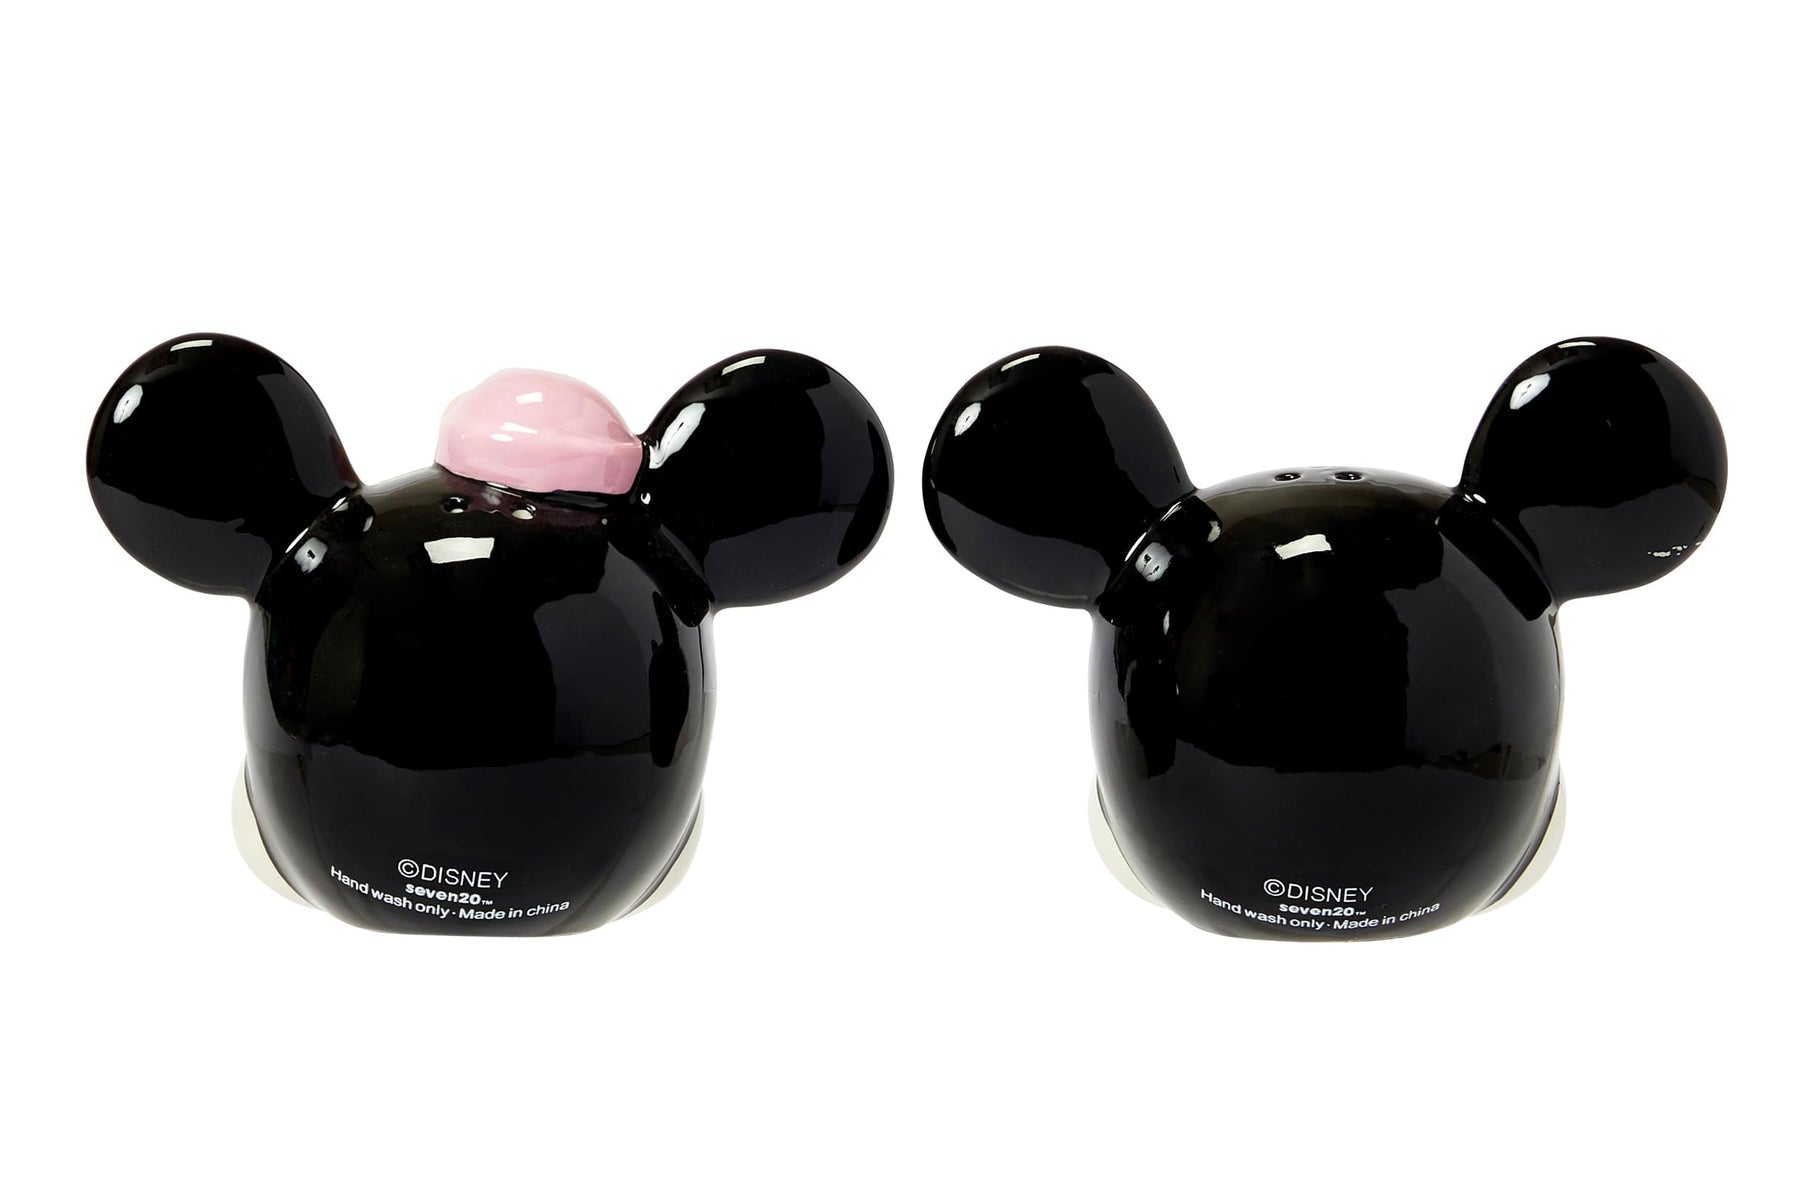 Disney Mickey Mouse & Minnie Mouse Salt & Pepper Shaker Set | Ceramic Shakers